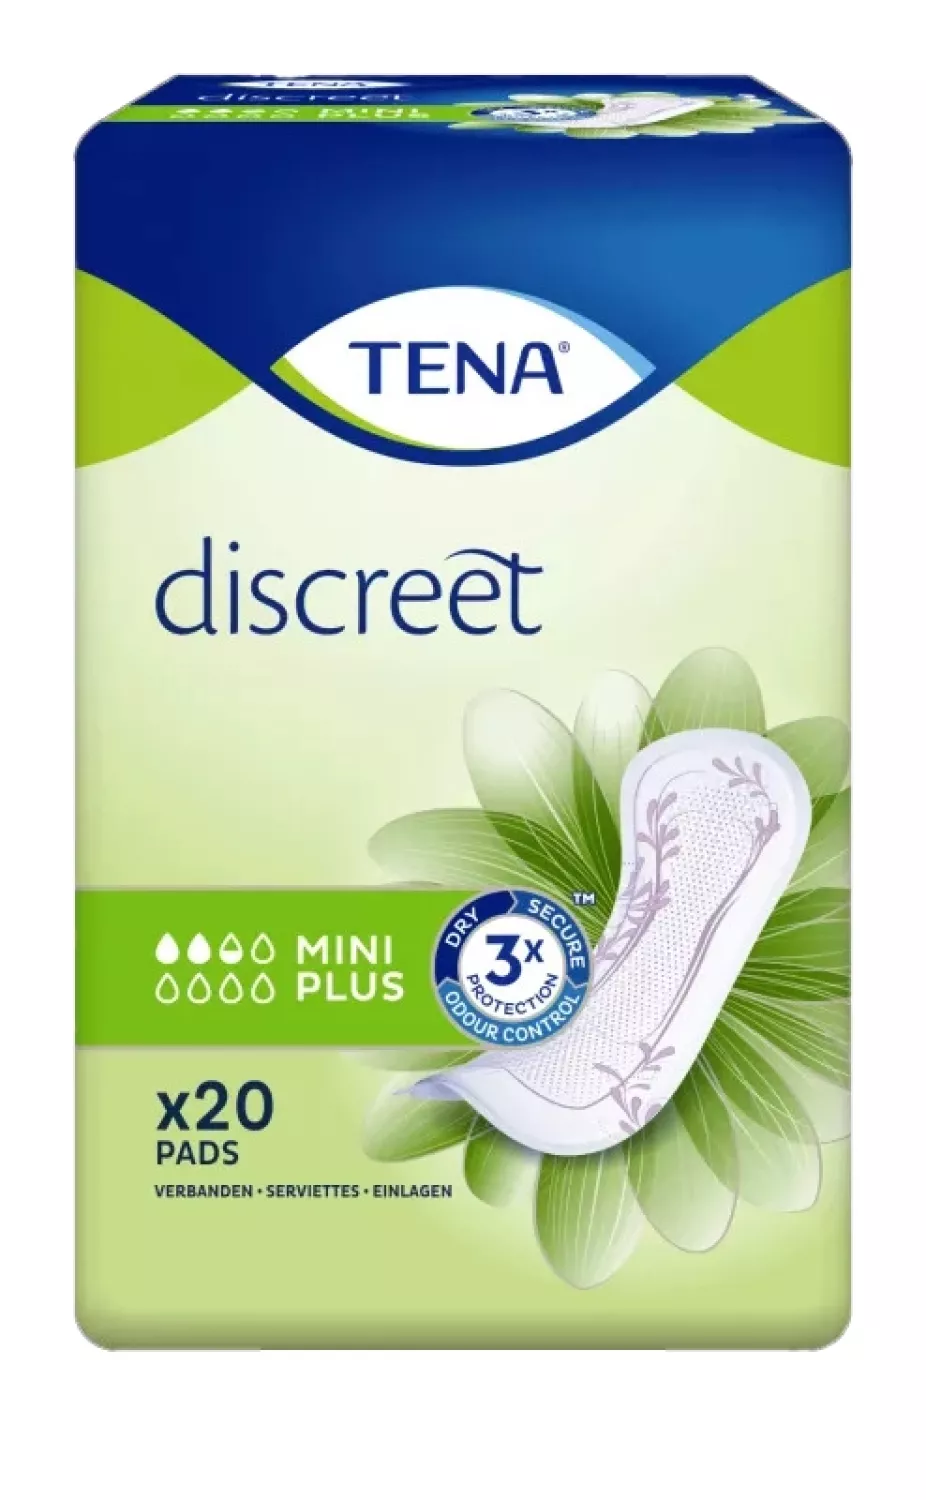 Omgekeerde te ontvangen Trots TENA Discreet Mini Plus - Goed thuiszorgwinkel